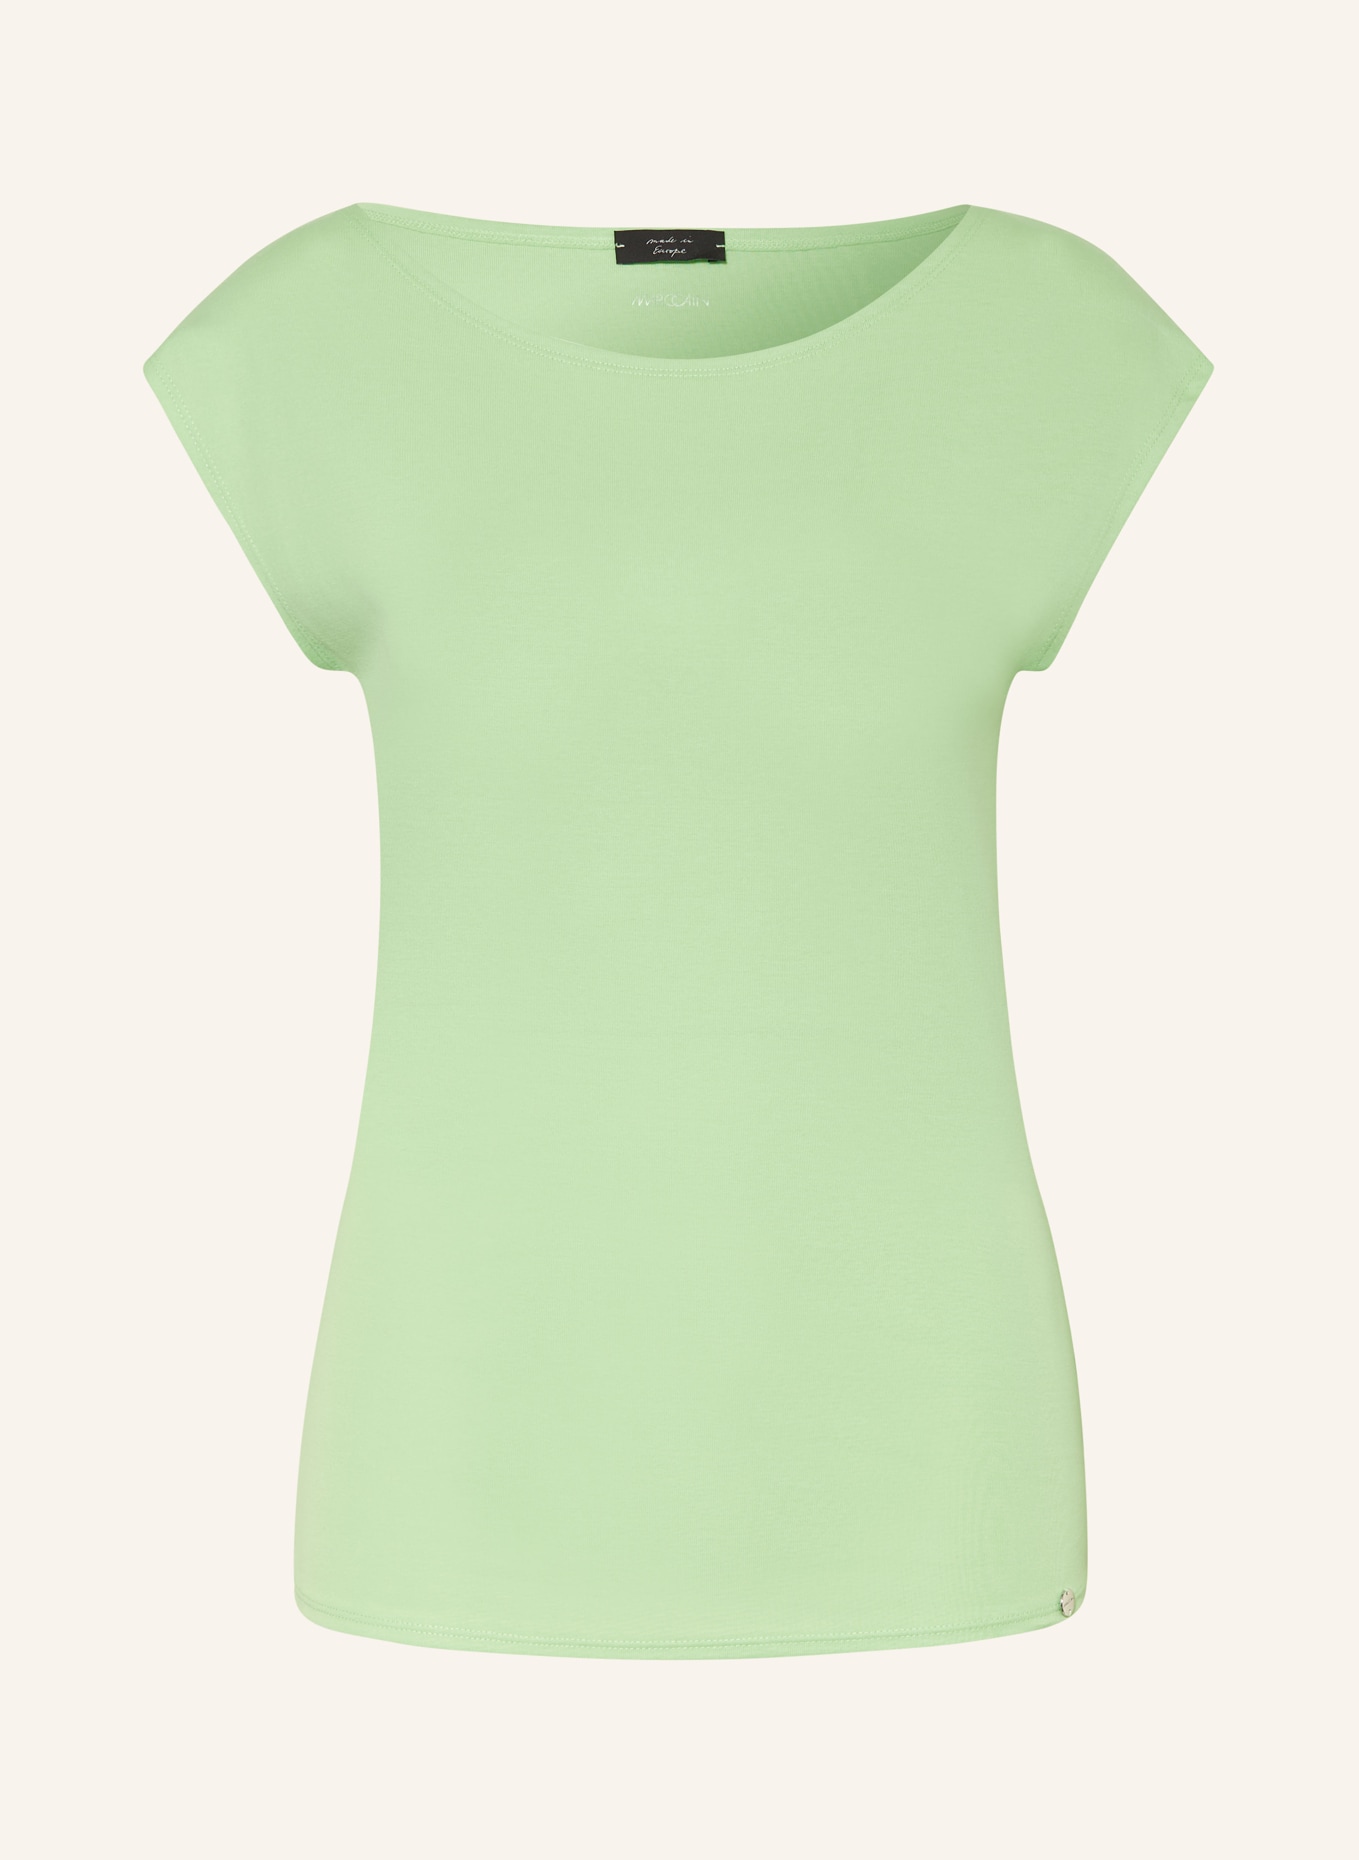 MARC CAIN T-Shirt, Farbe: 531 light apple green (Bild 1)